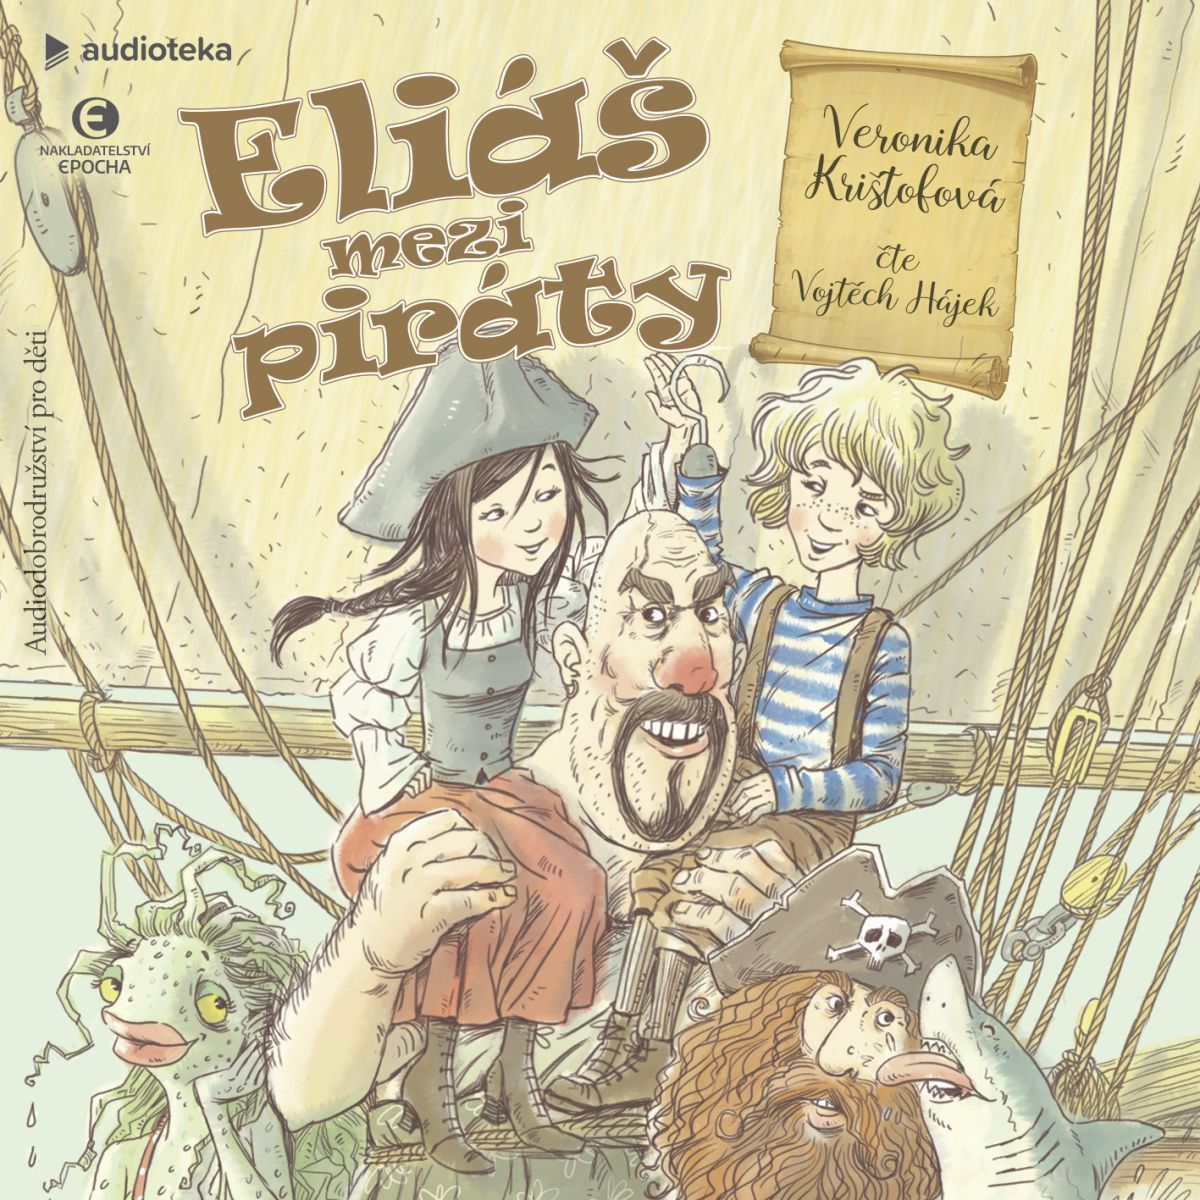 Elias_mezi_piraty_COVER_01